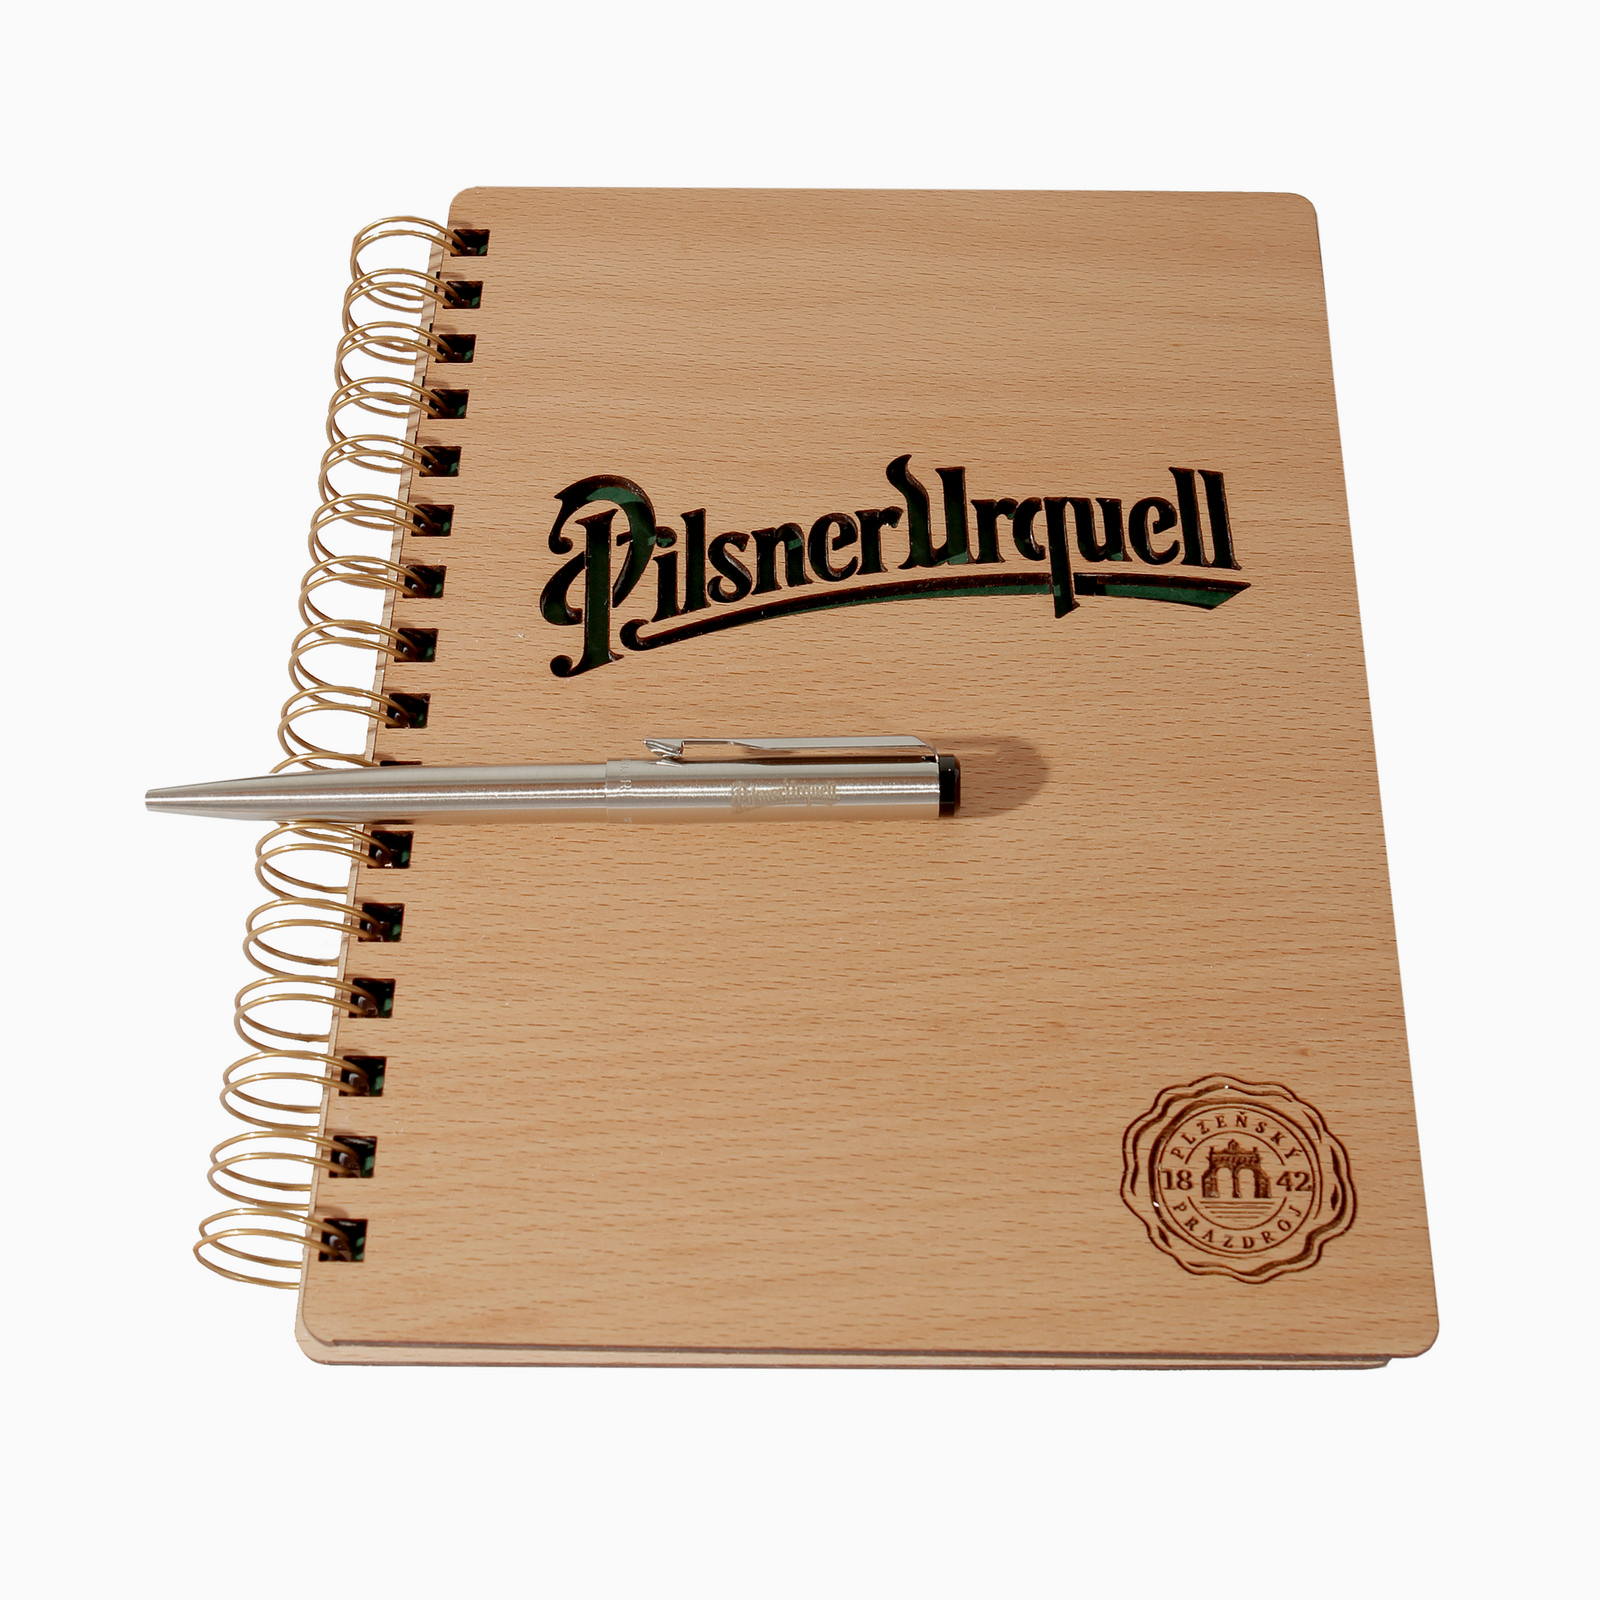 Pilsner Urquell Package For Her